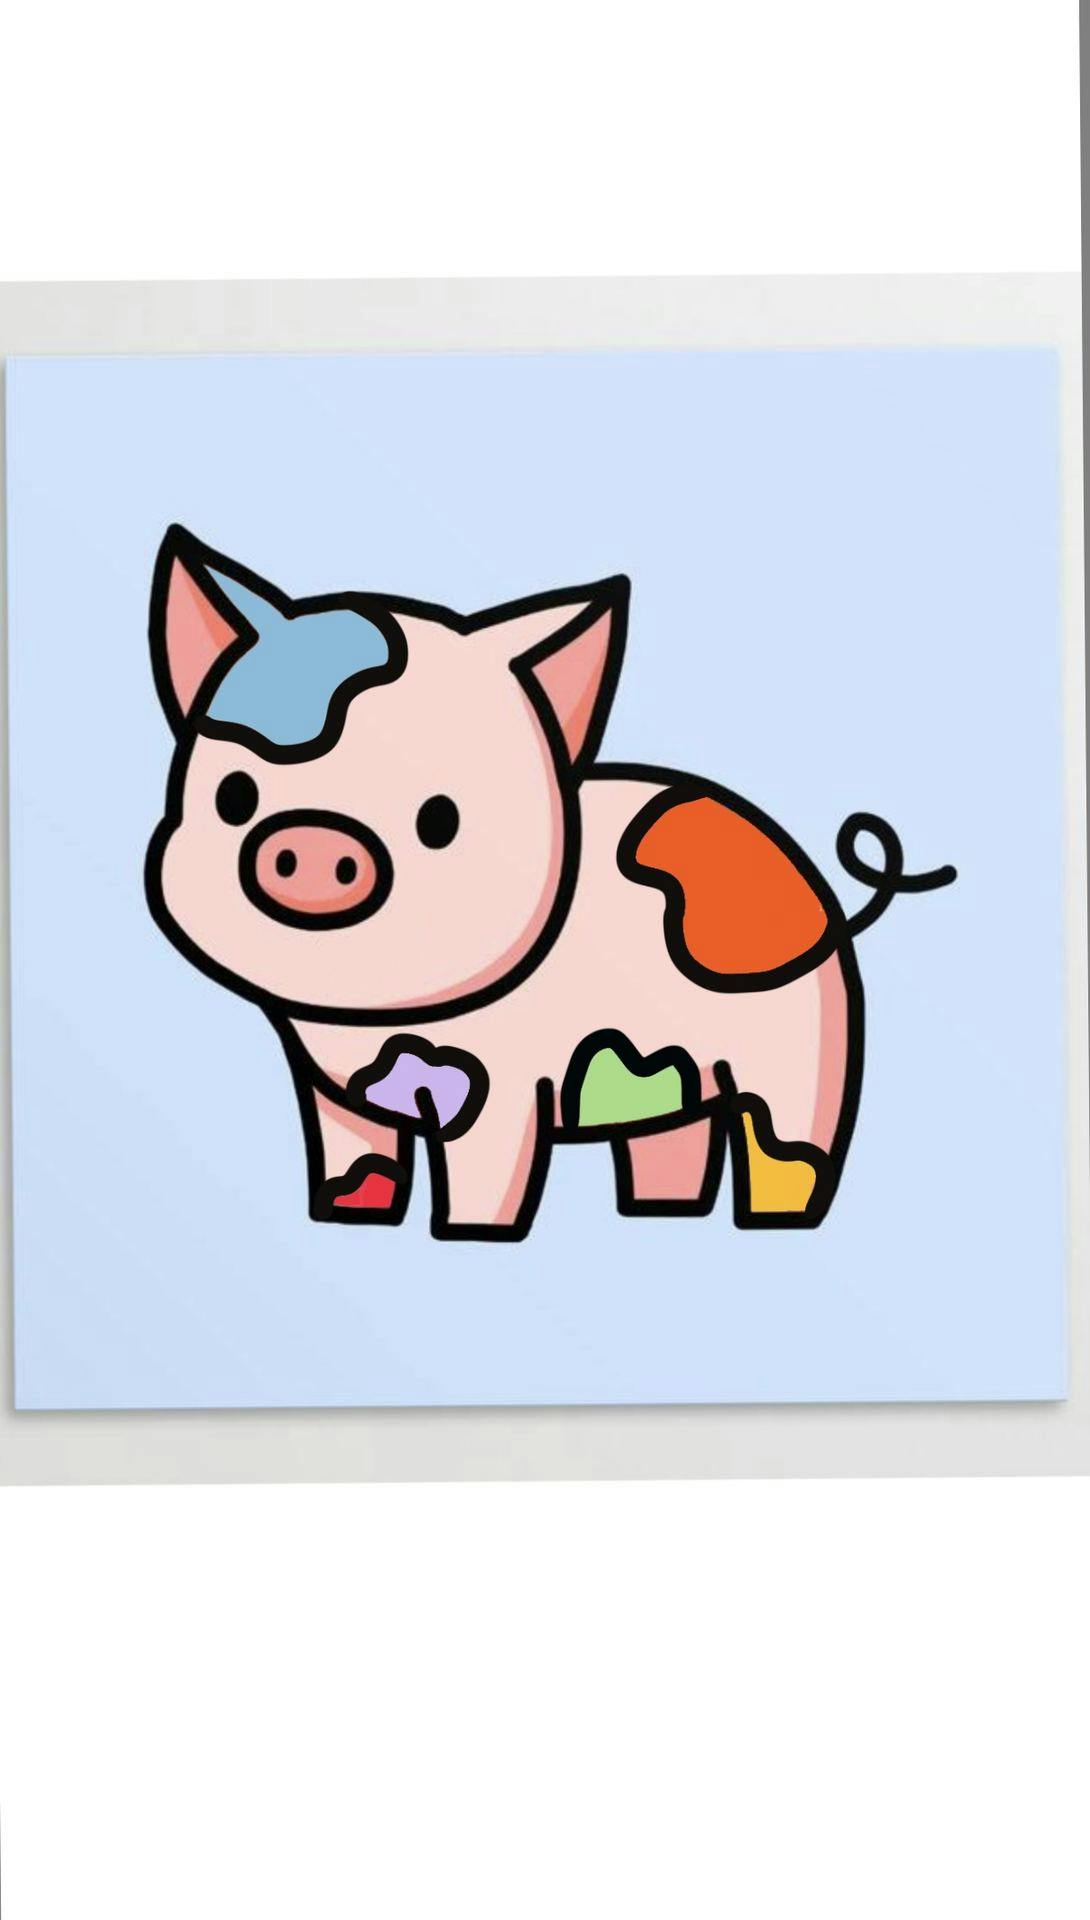 Piggy Art Forever cover image